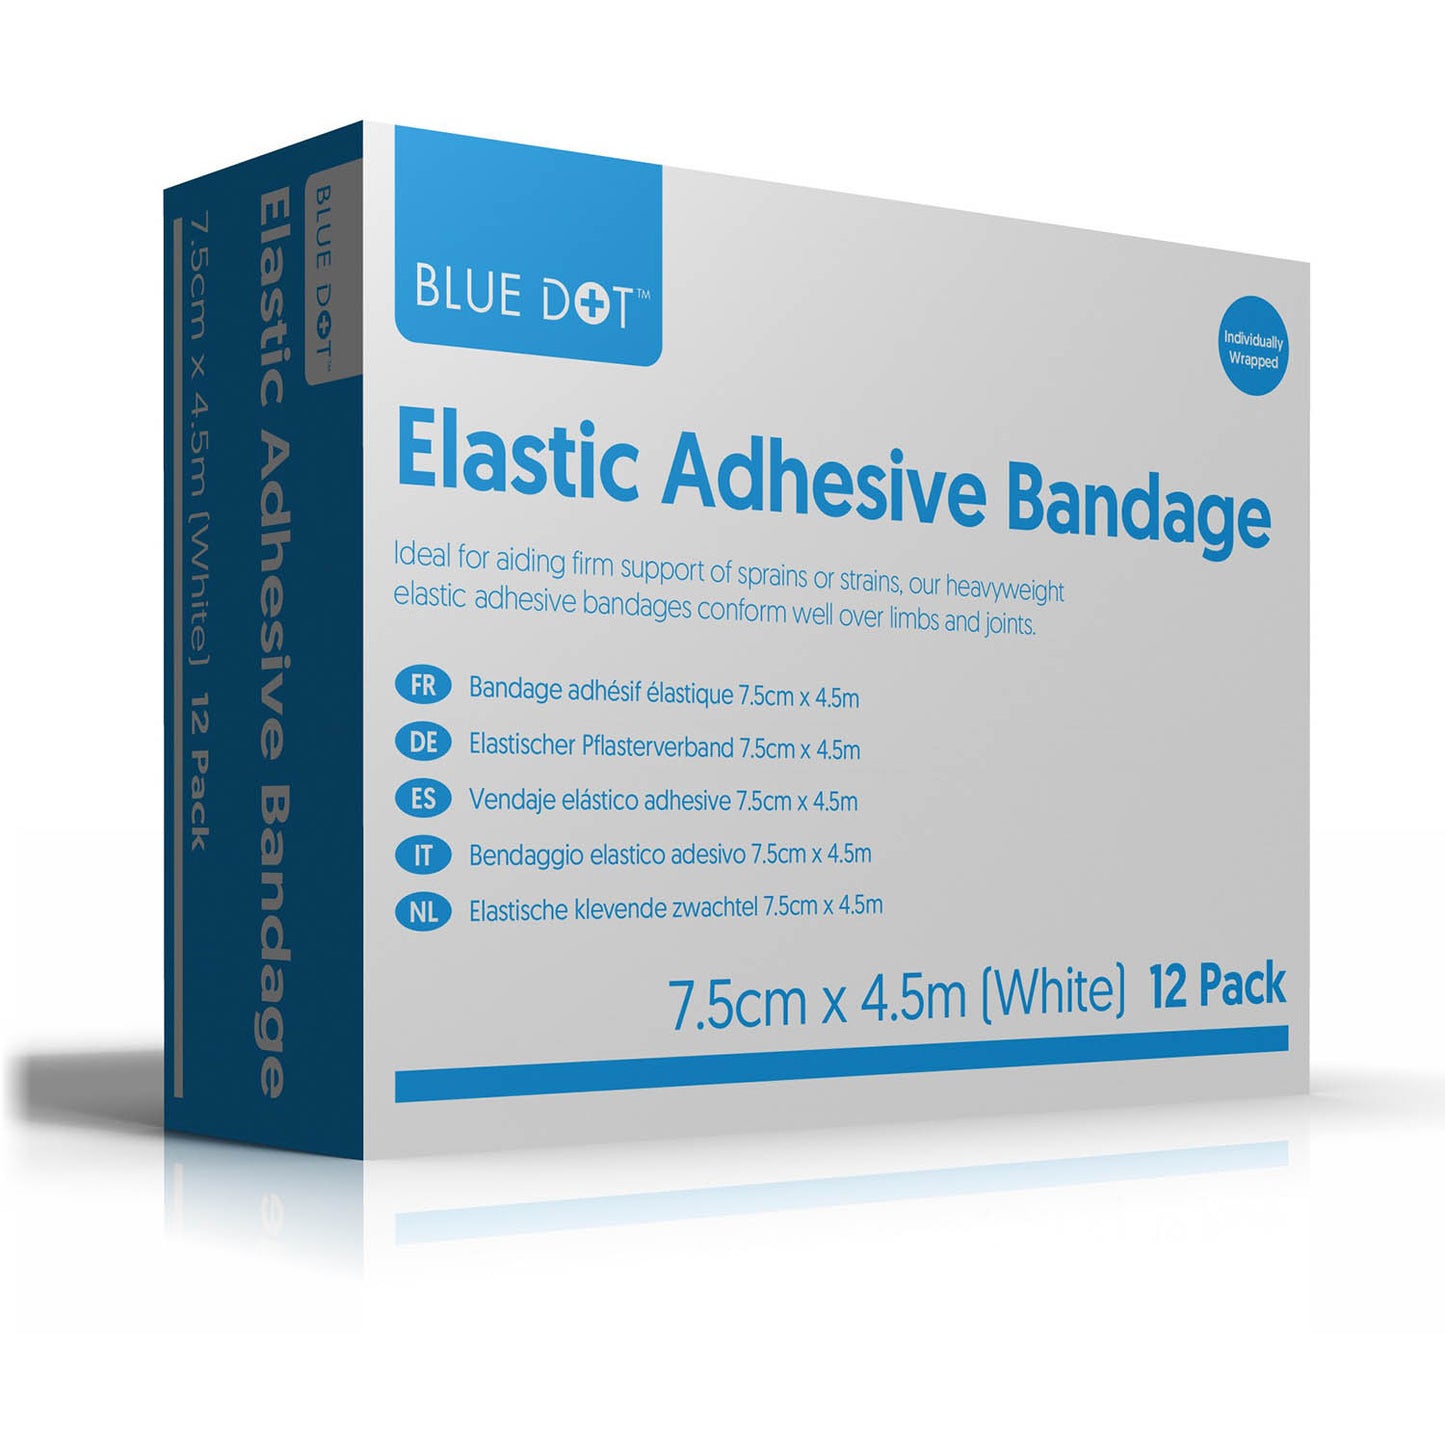 Blue Dot Elastic Adhesive Bandage 7.5cm x 4.5m x 1